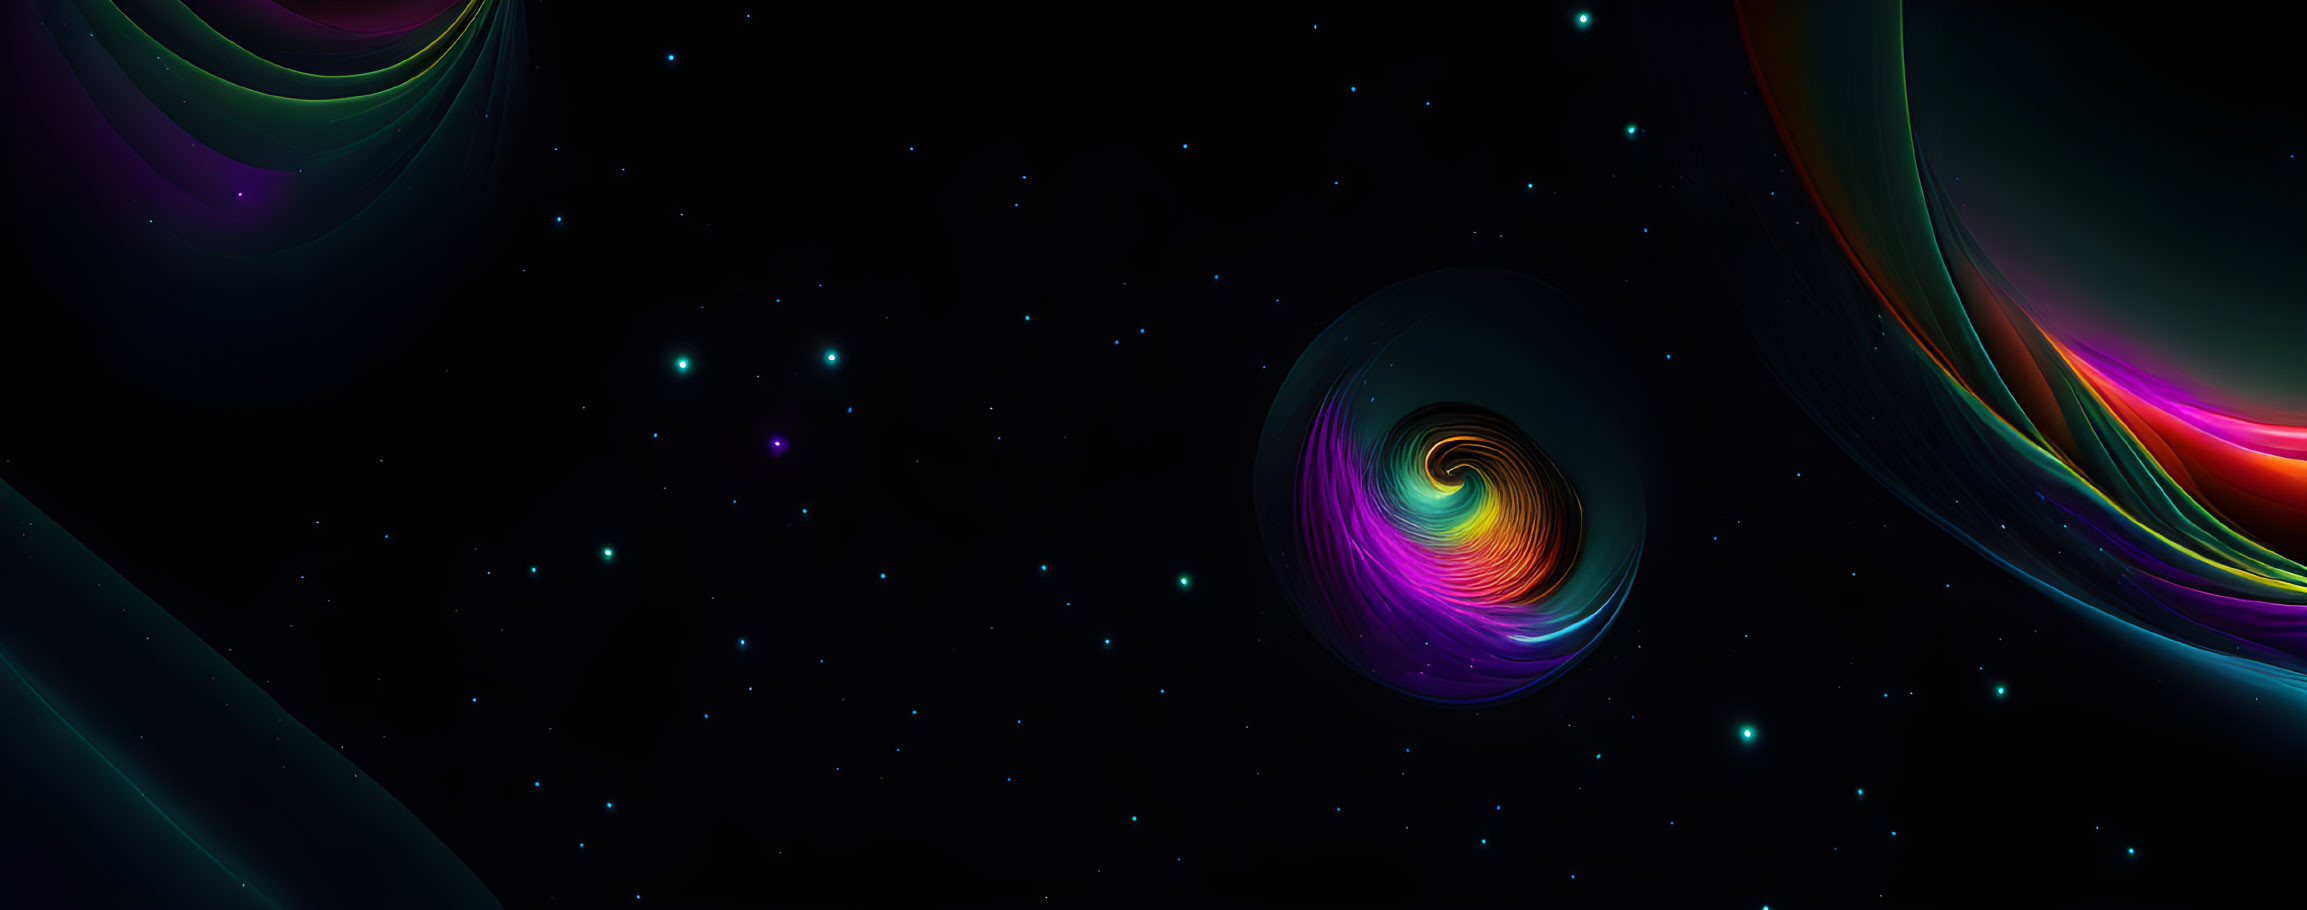 Vibrant Cosmic Scene with Multicolored Nebulas and Stars